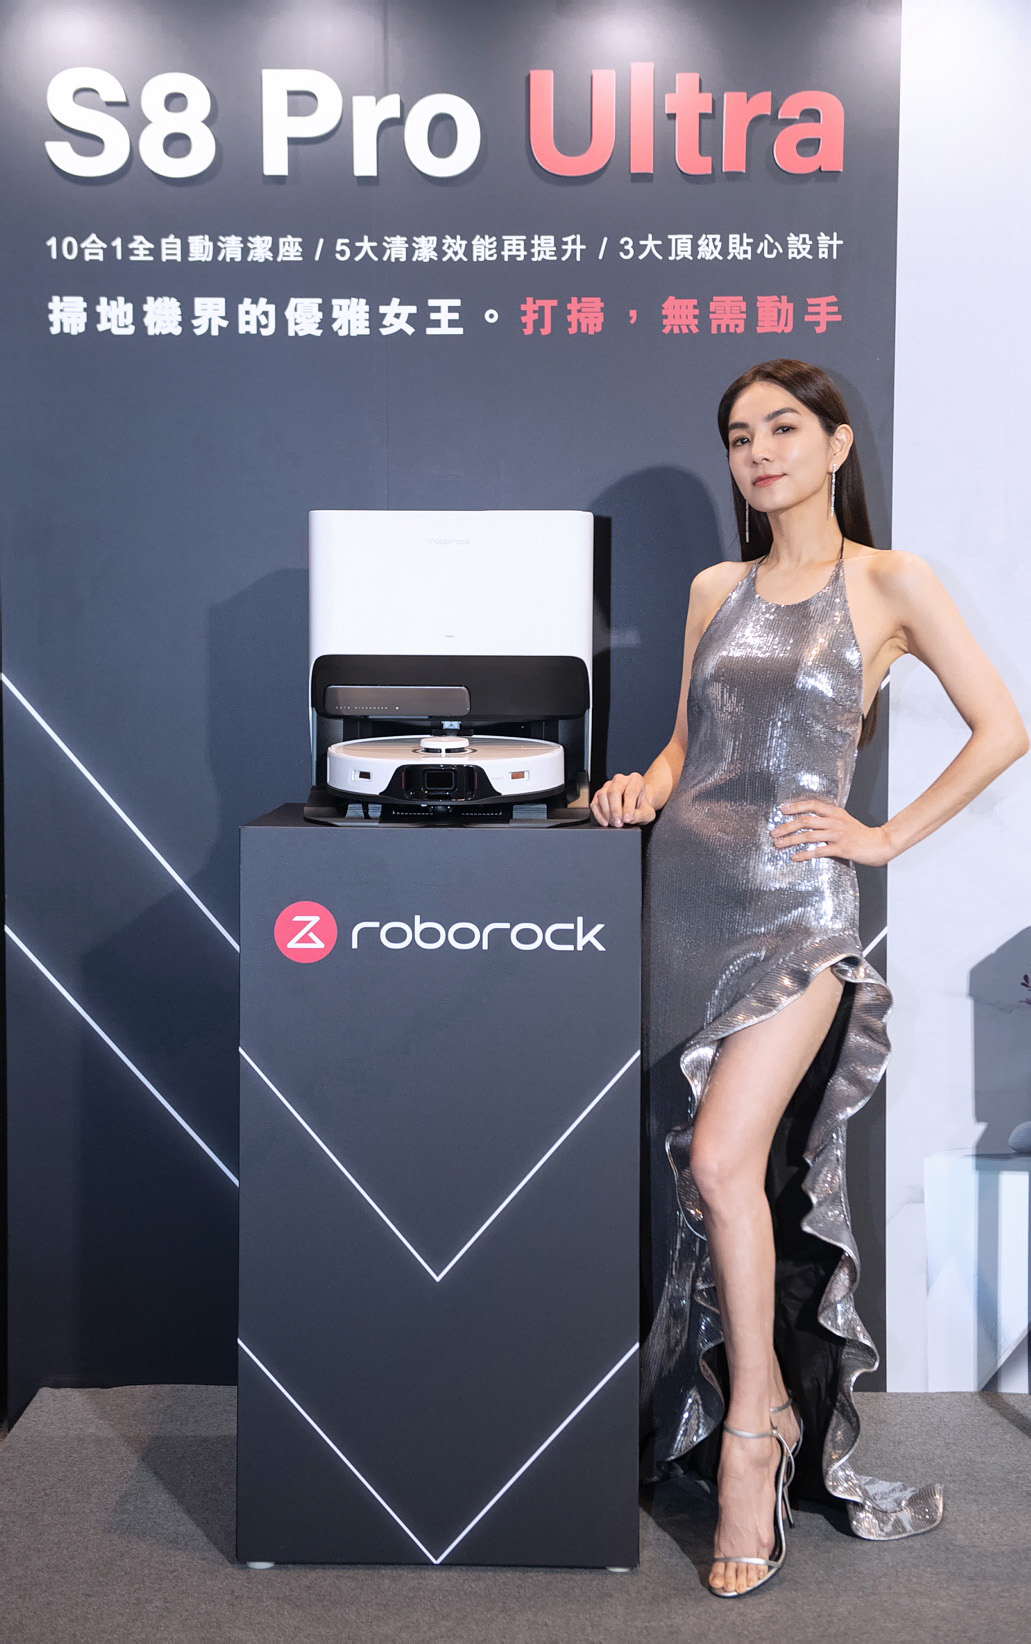 Roborock；掃地機器人；S8 Pro Ultra；Ella陳嘉樺